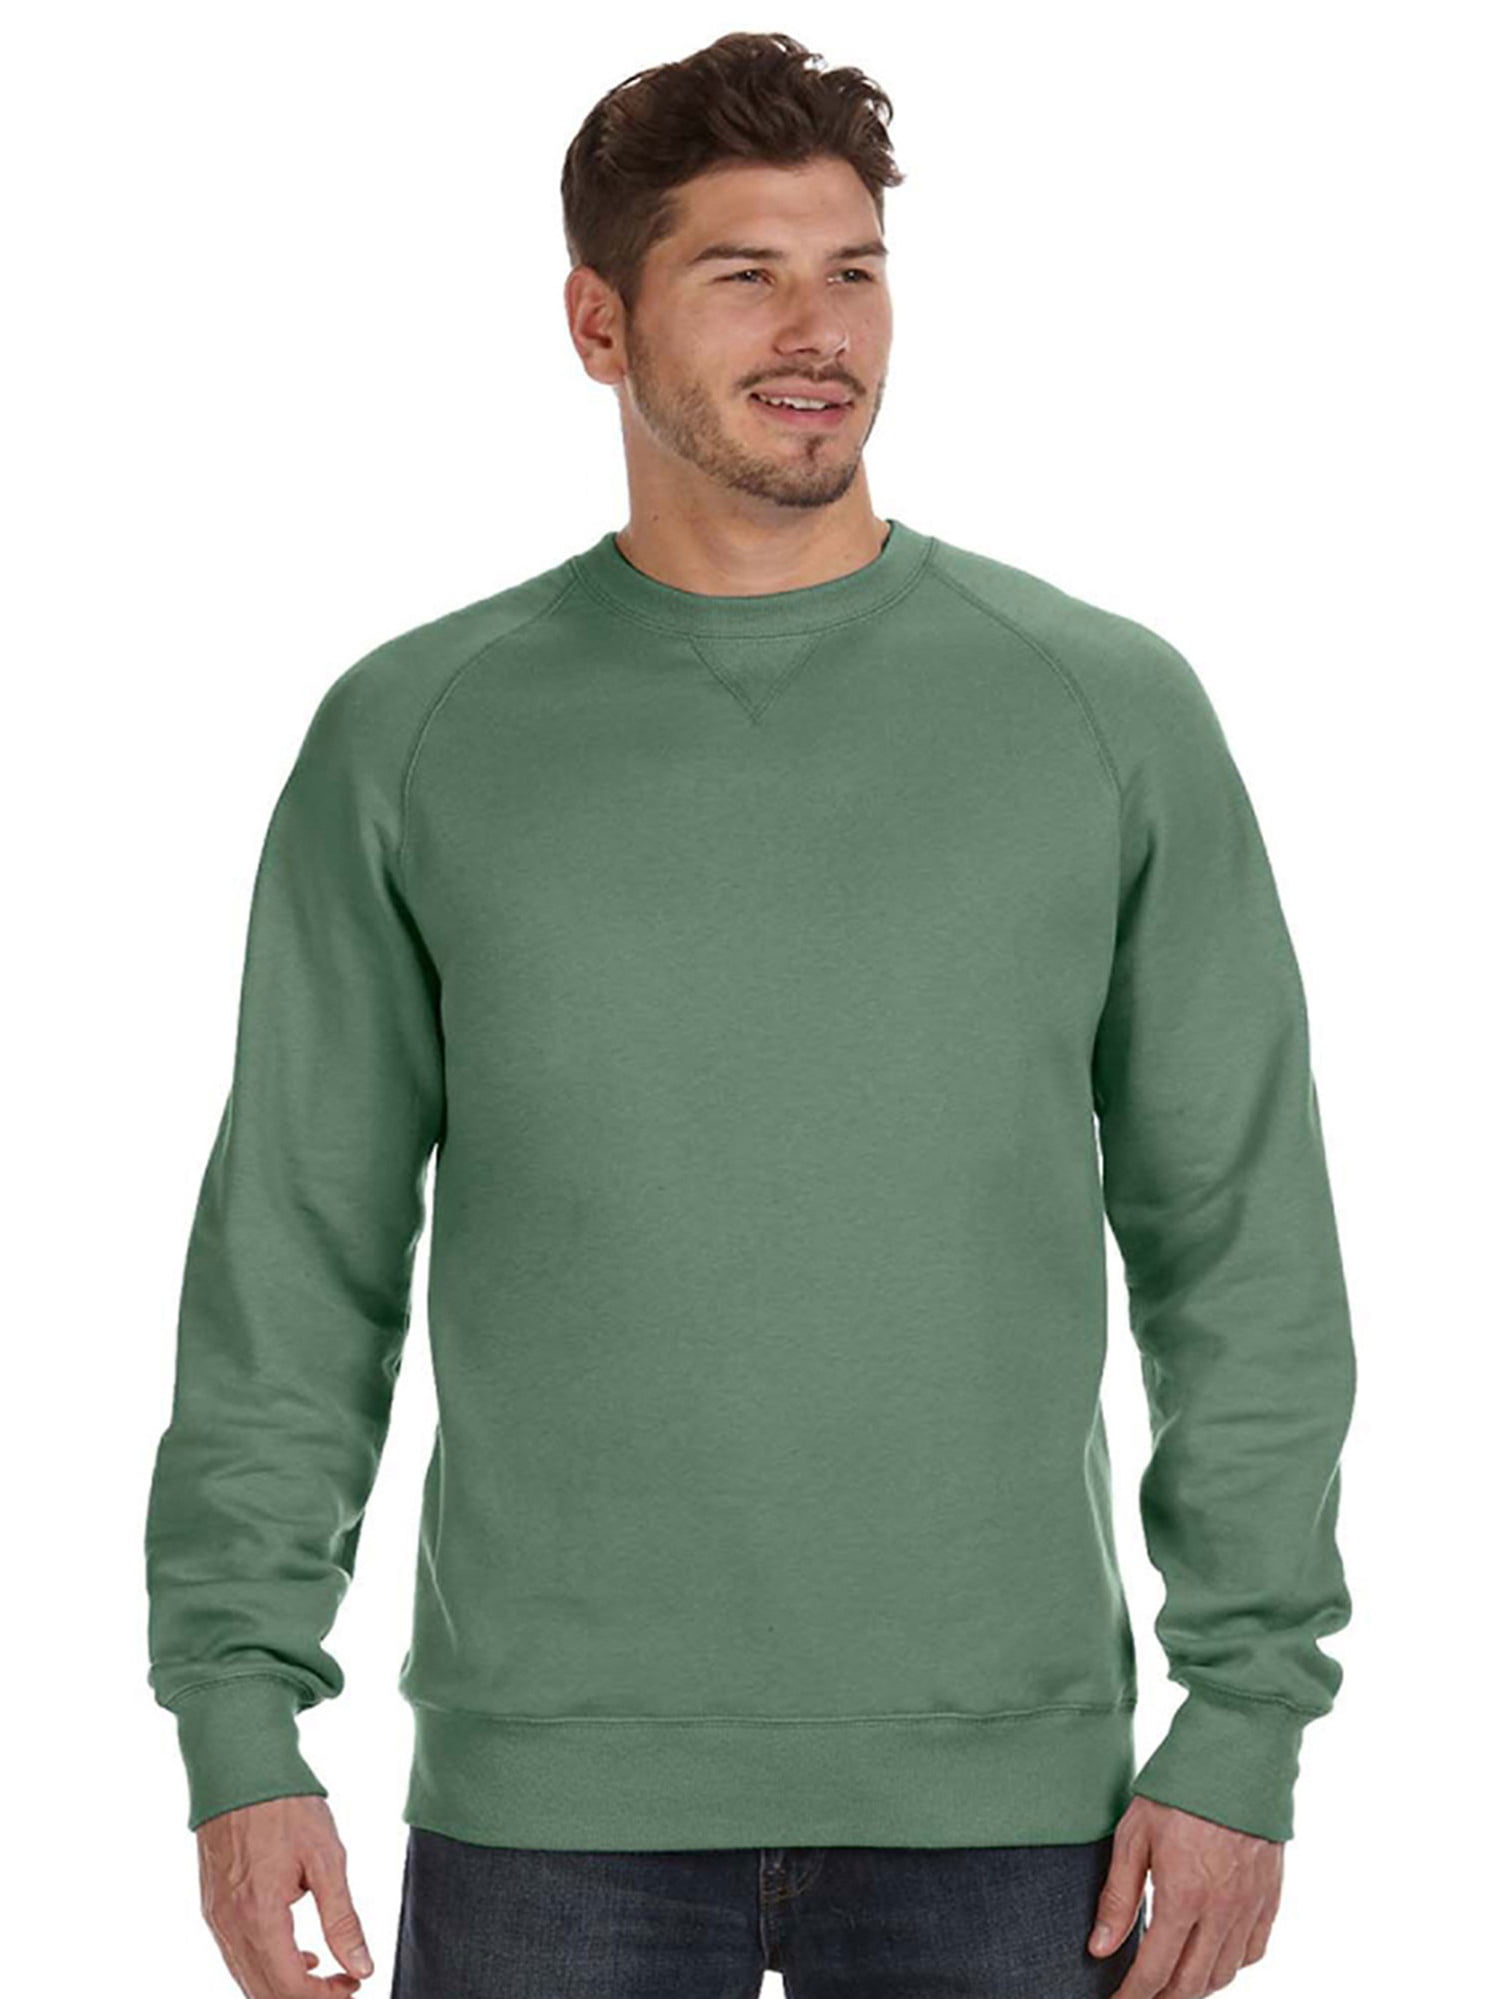 Hanes Nano Crewneck Raglan sleeve Mens Sweatshirt N260 S-3XL Tag-free neck label